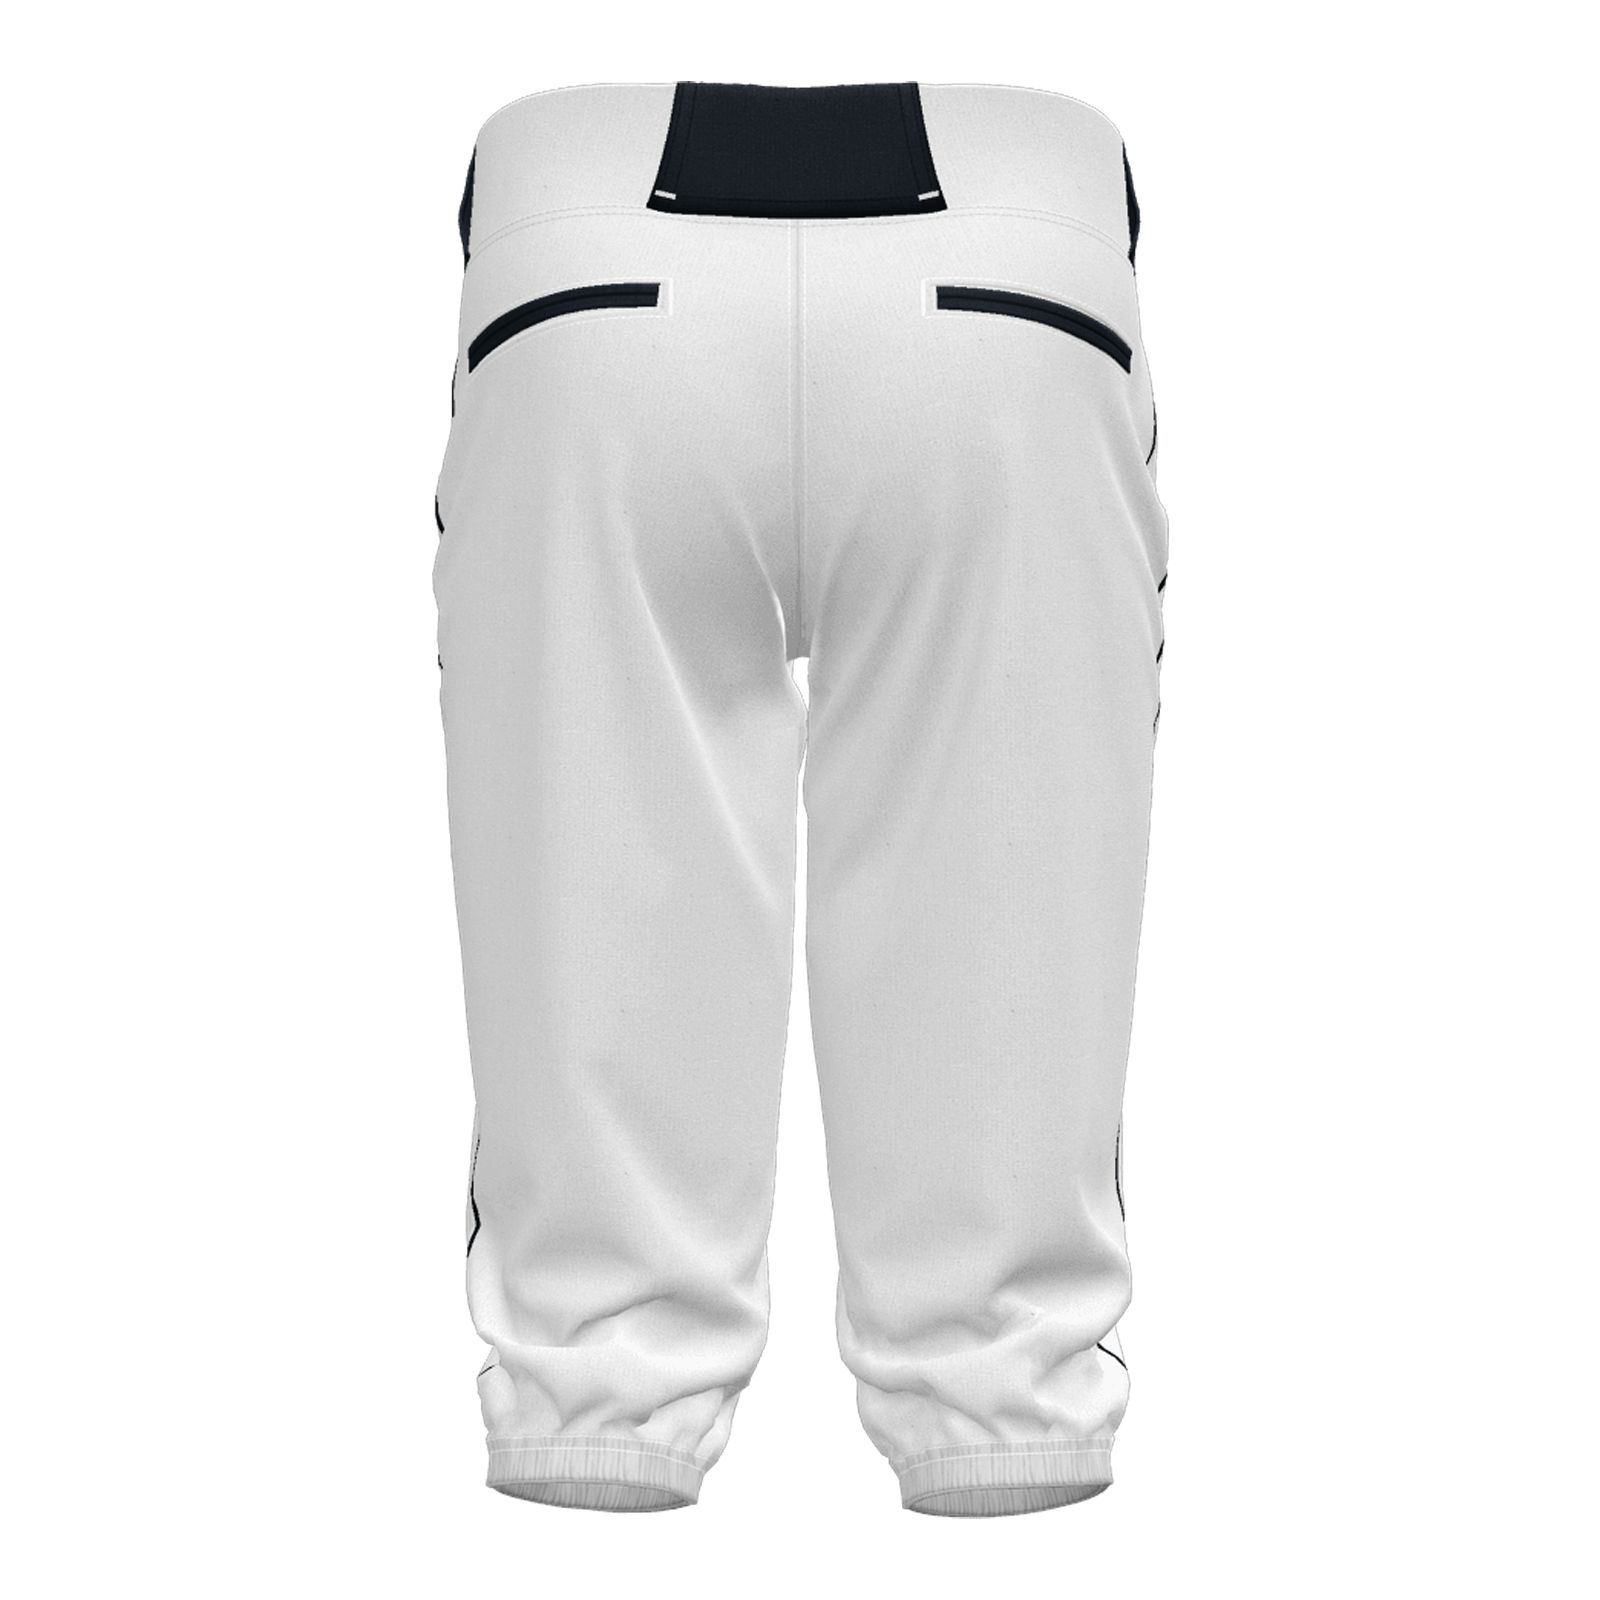 Nike Baseball Pants, Size XL , length 32. New